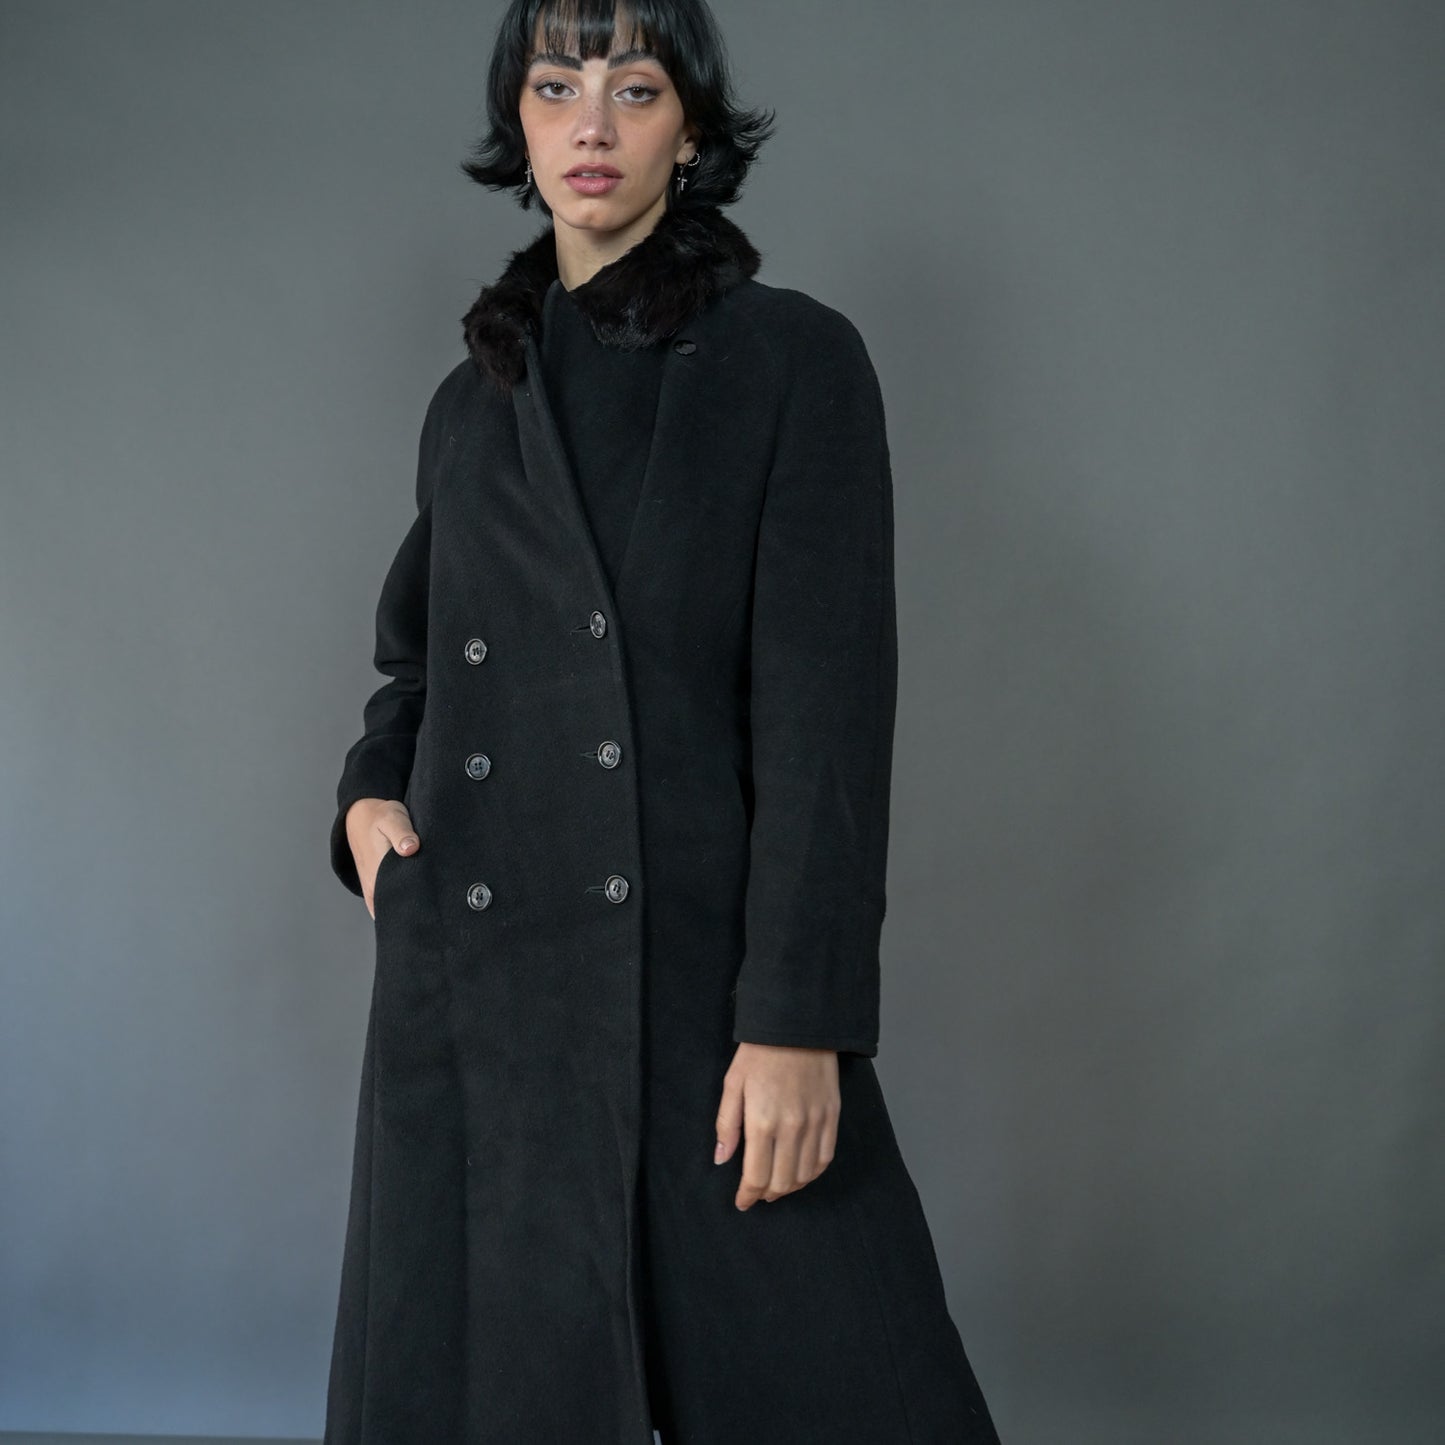 VIN-OUTW-20245 Vintage μάλλινο παλτό μαύρο M-L